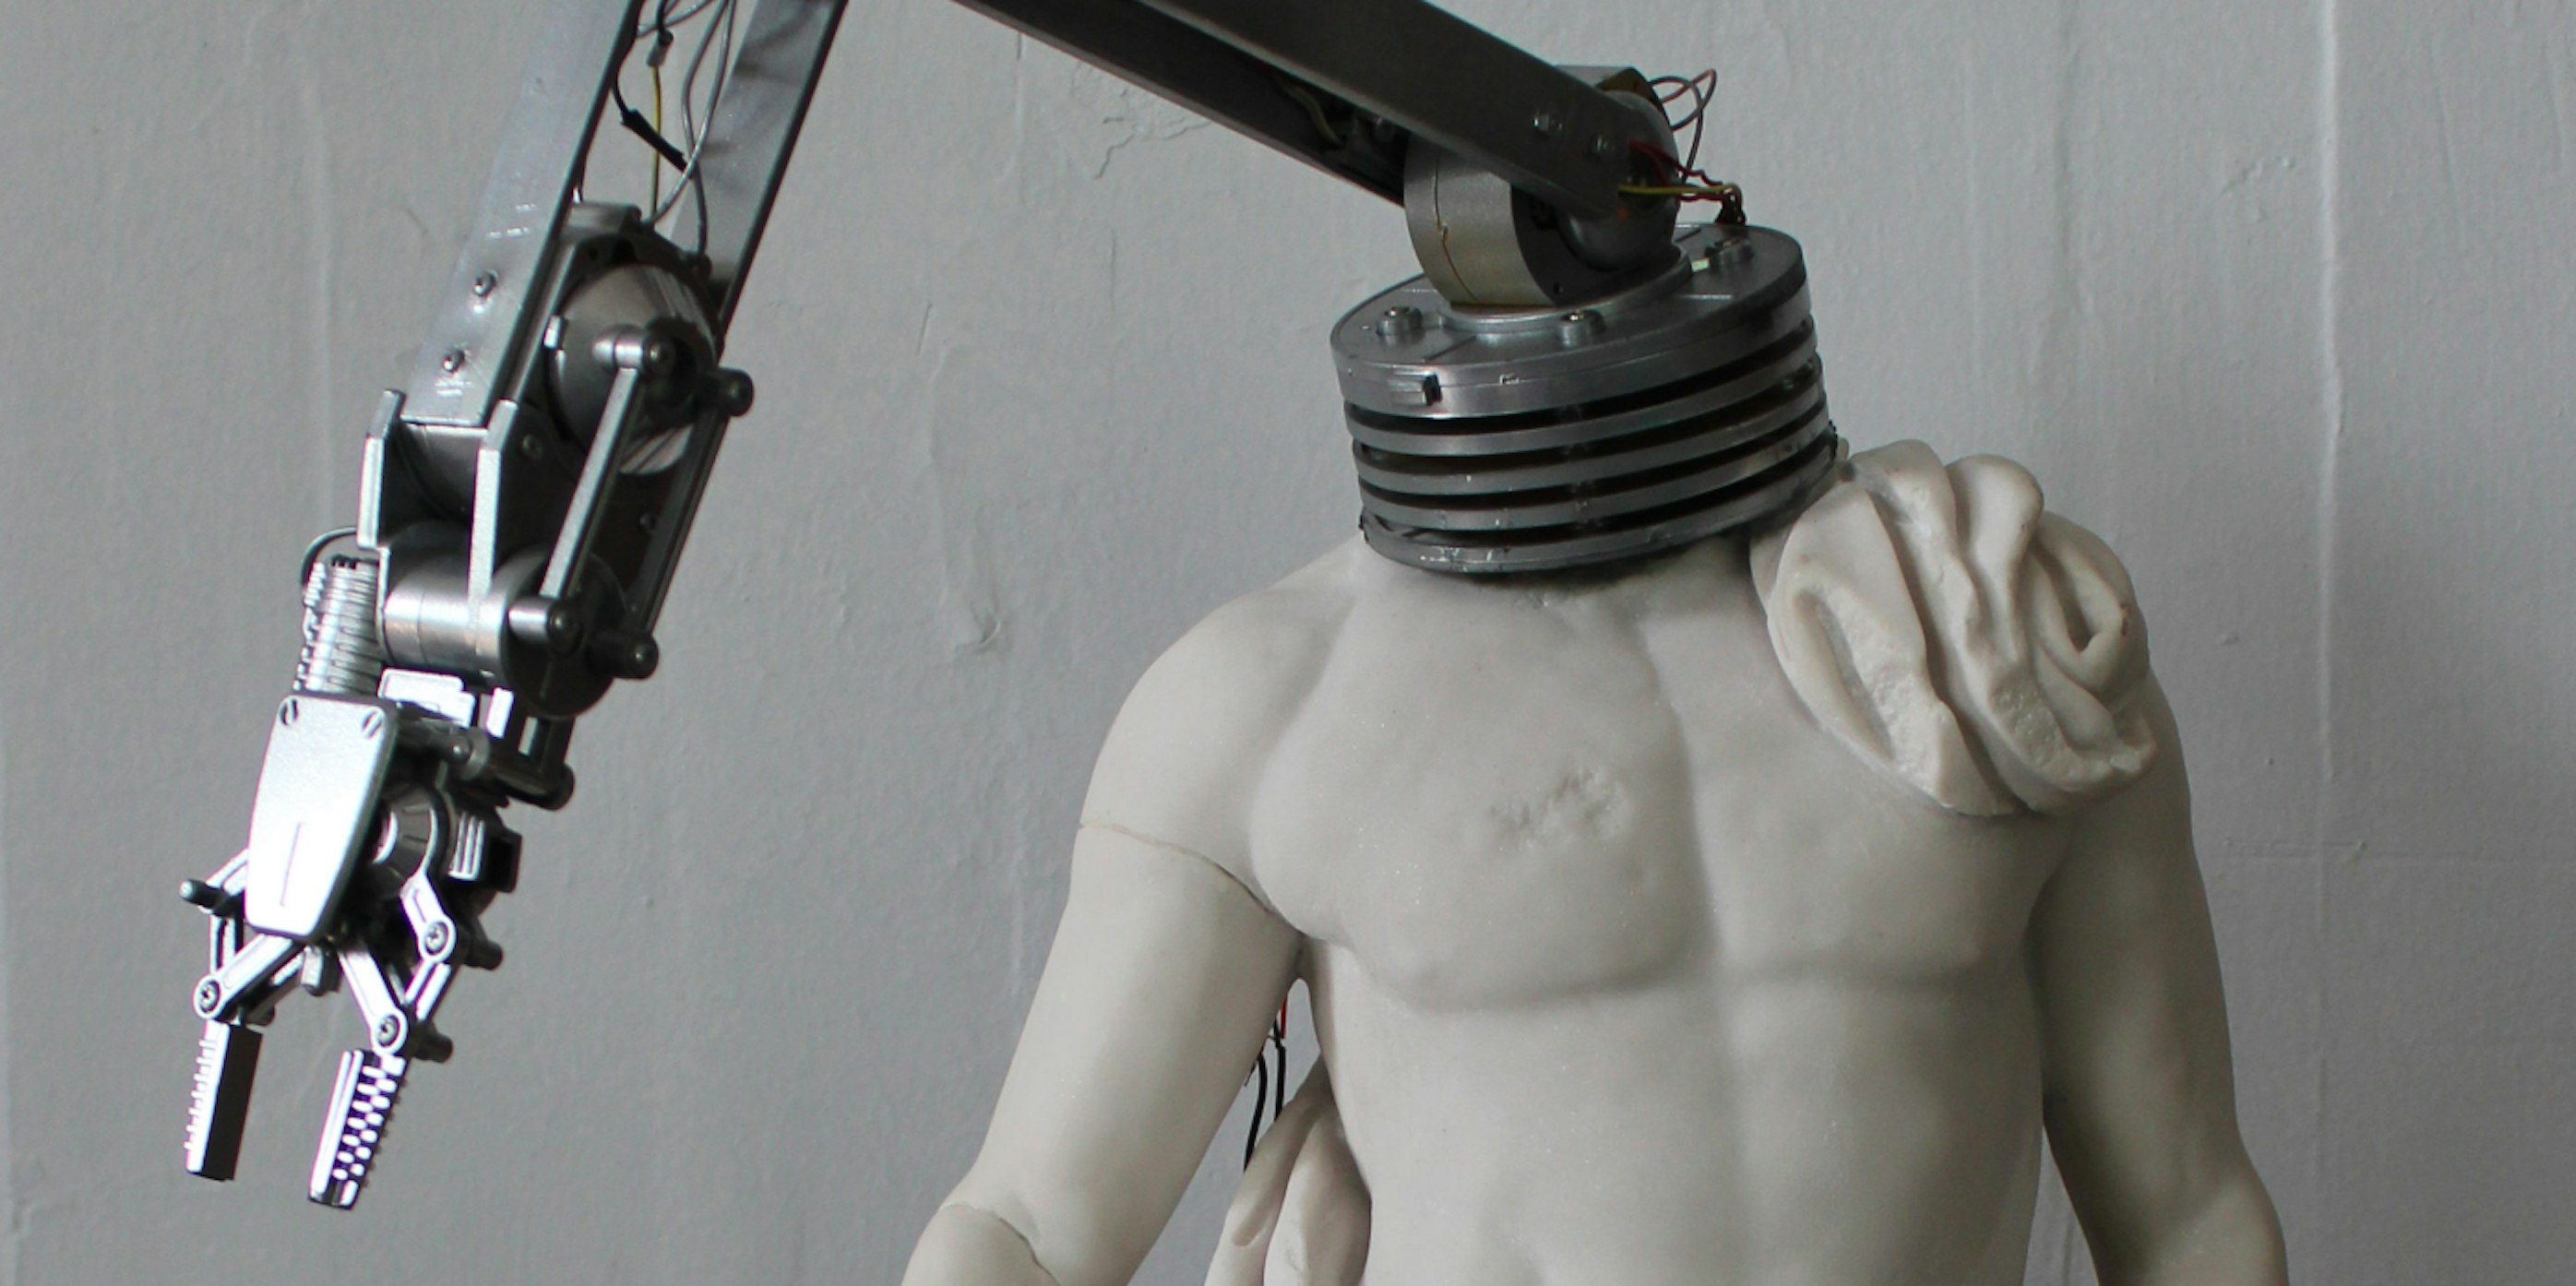 Genco Gulan's “Hello,” a sculpture depicting classical robotics.